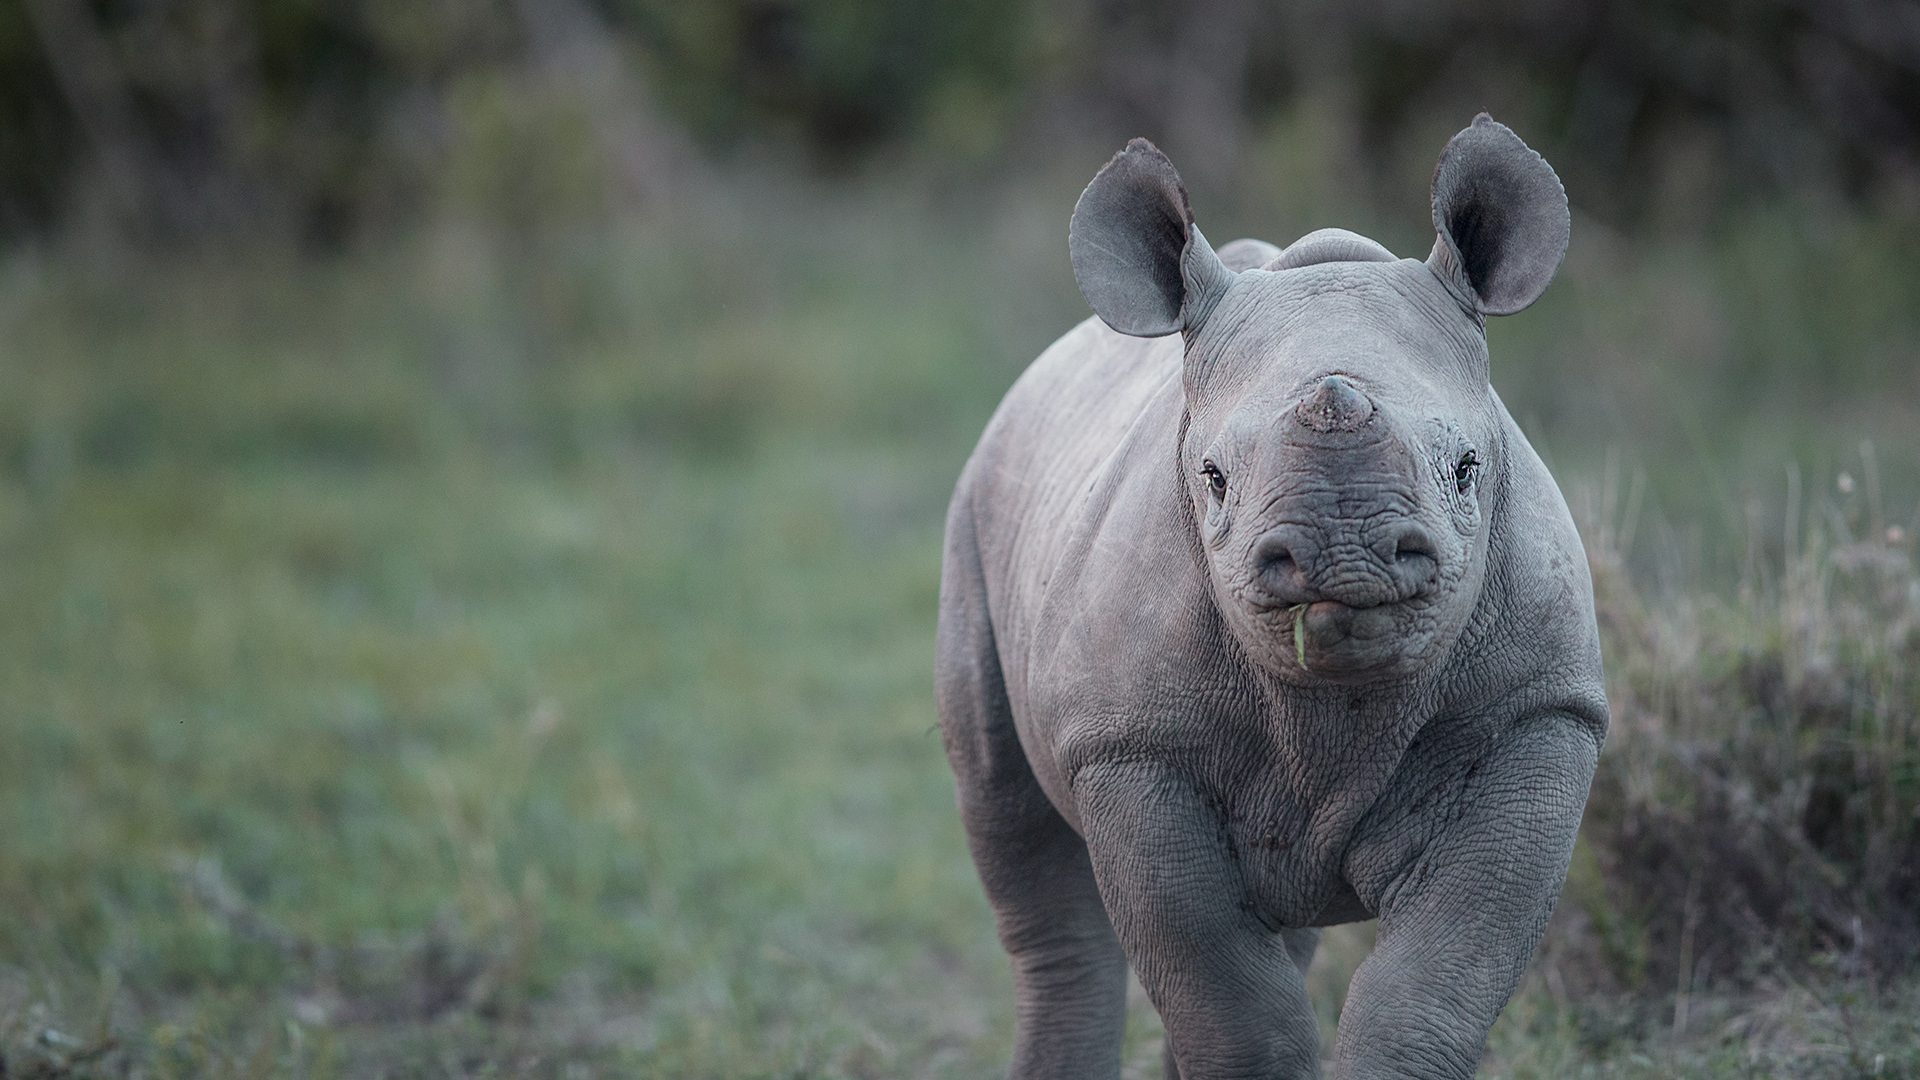 A photo of a baby rhino running towards the camera